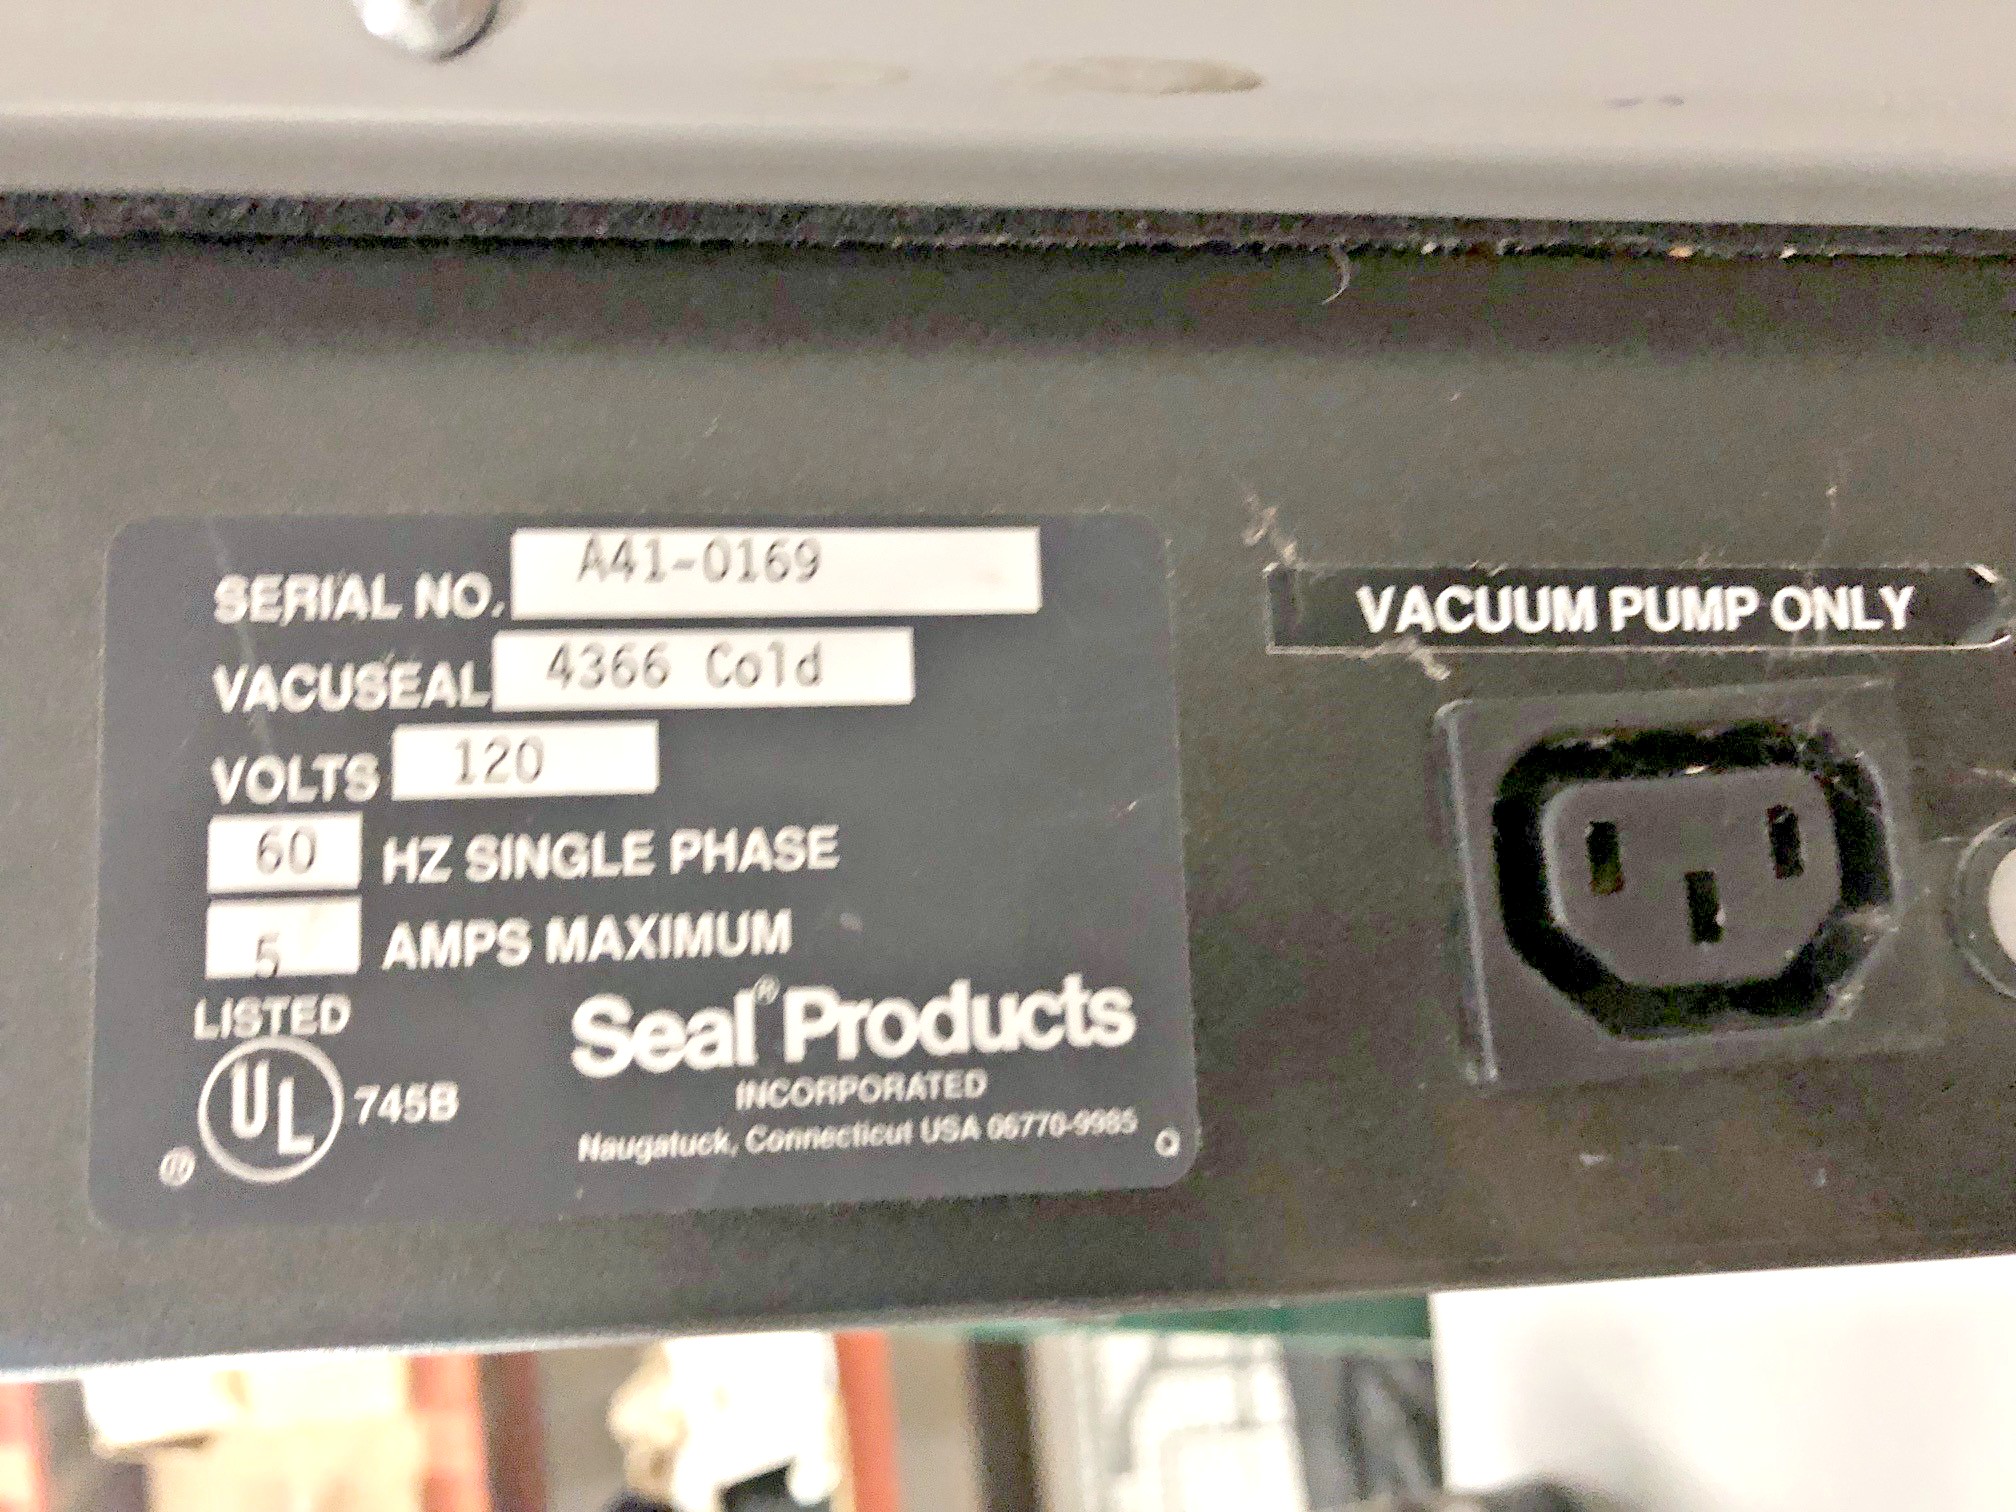 VacuSeal 4366 Cold Vacuum Dry Mount Press (Used) Item # UFE-M1782